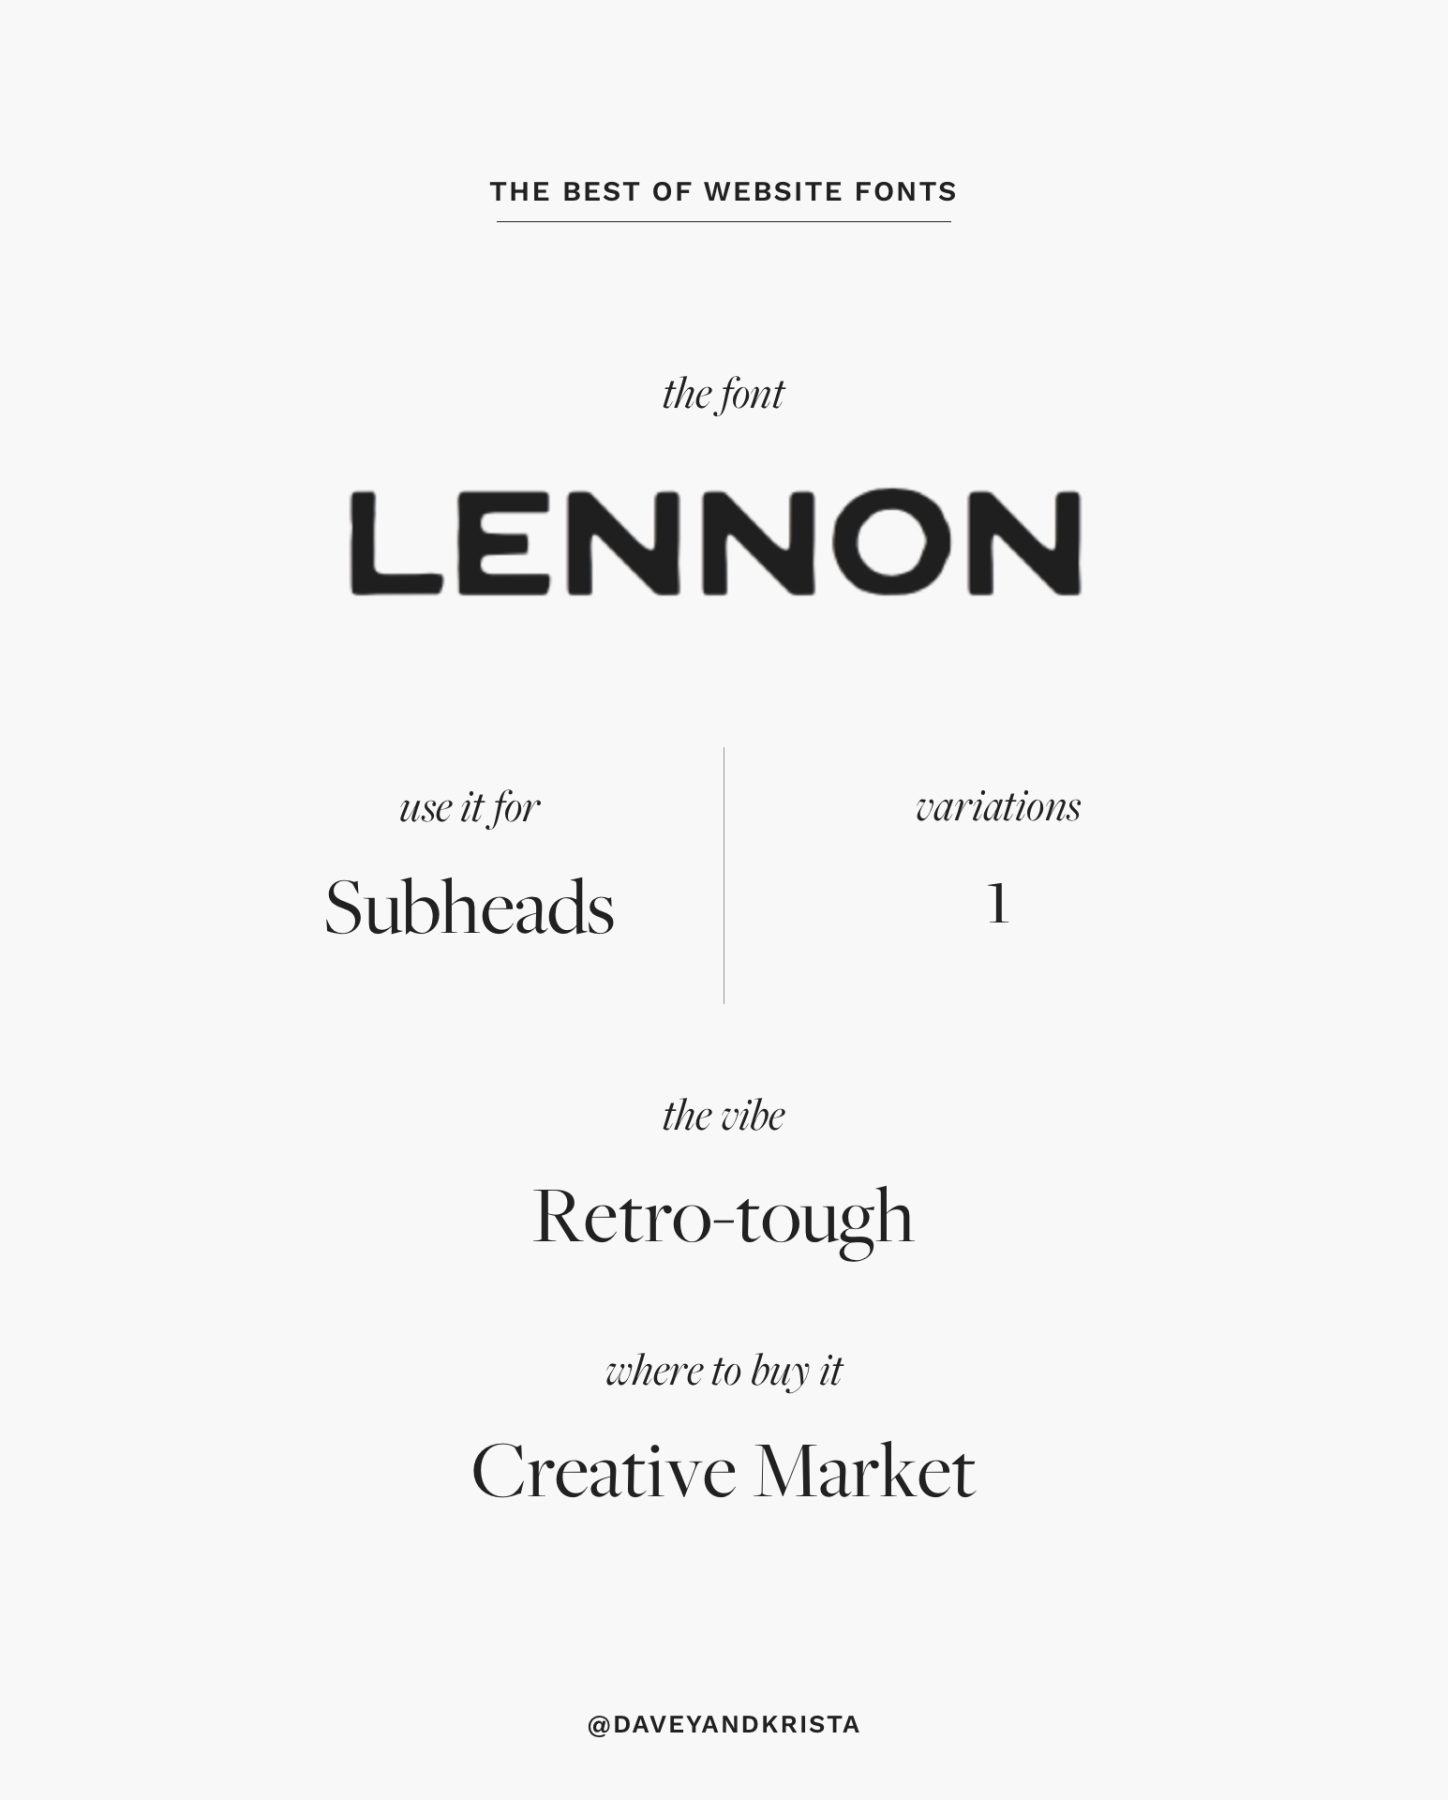 Lennon - a retro sans serif font for websites. | The Best Fonts for Websites